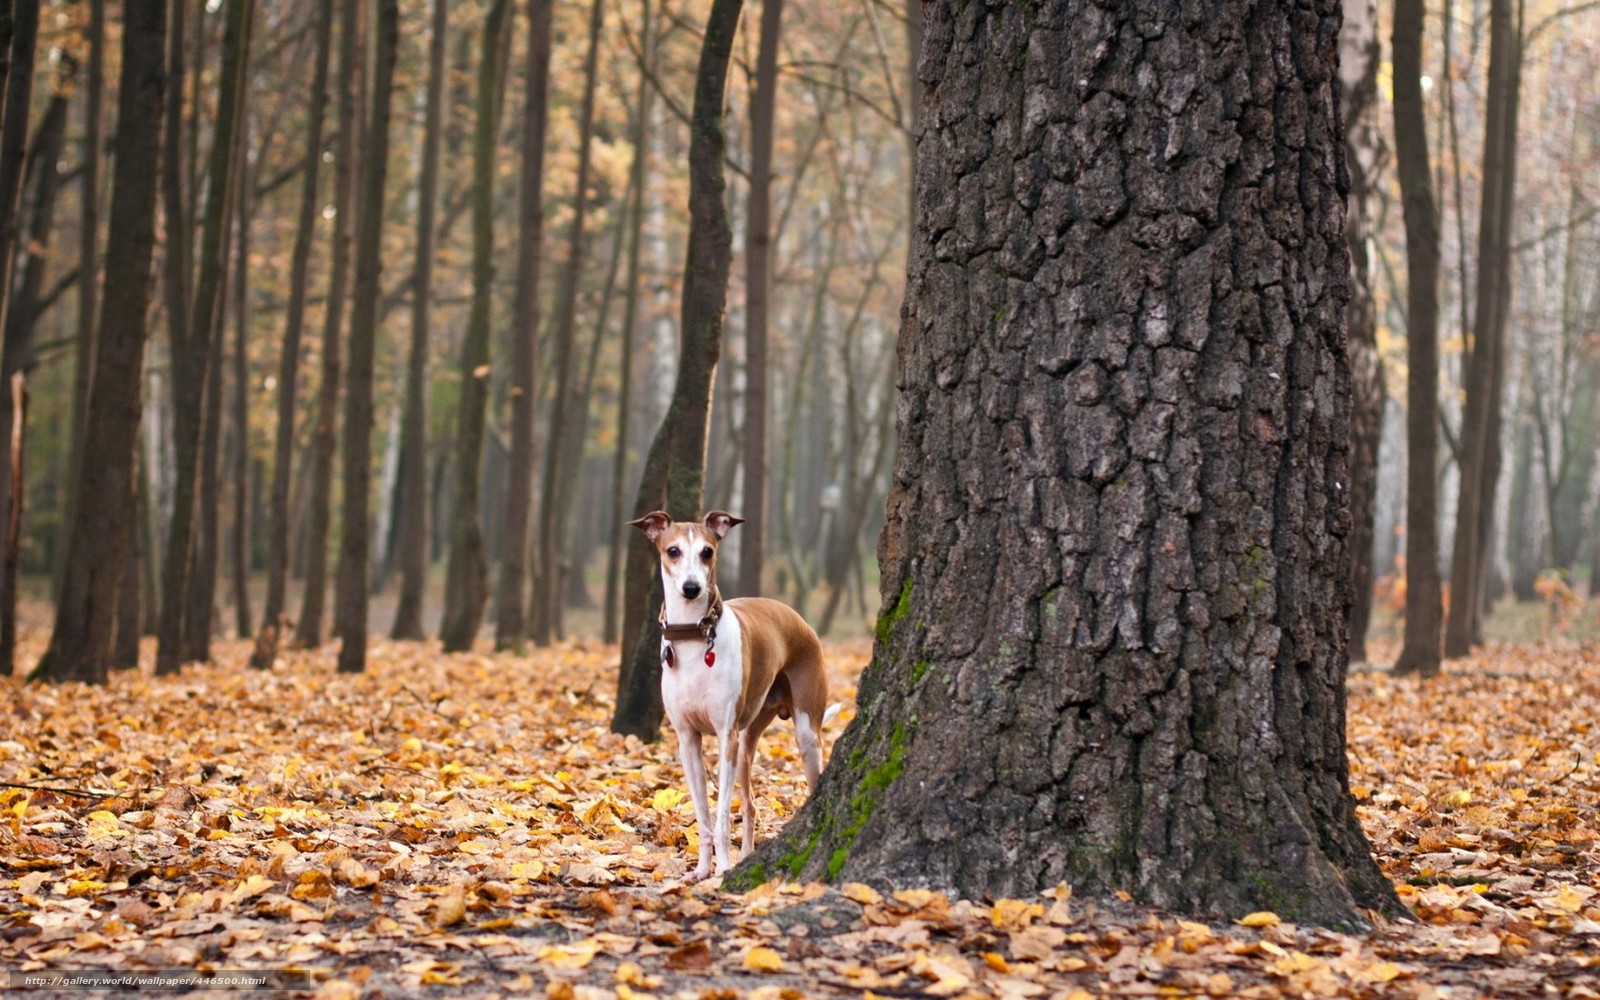 Download wallpaper dog leaves autumn free desktop wallpaper in the